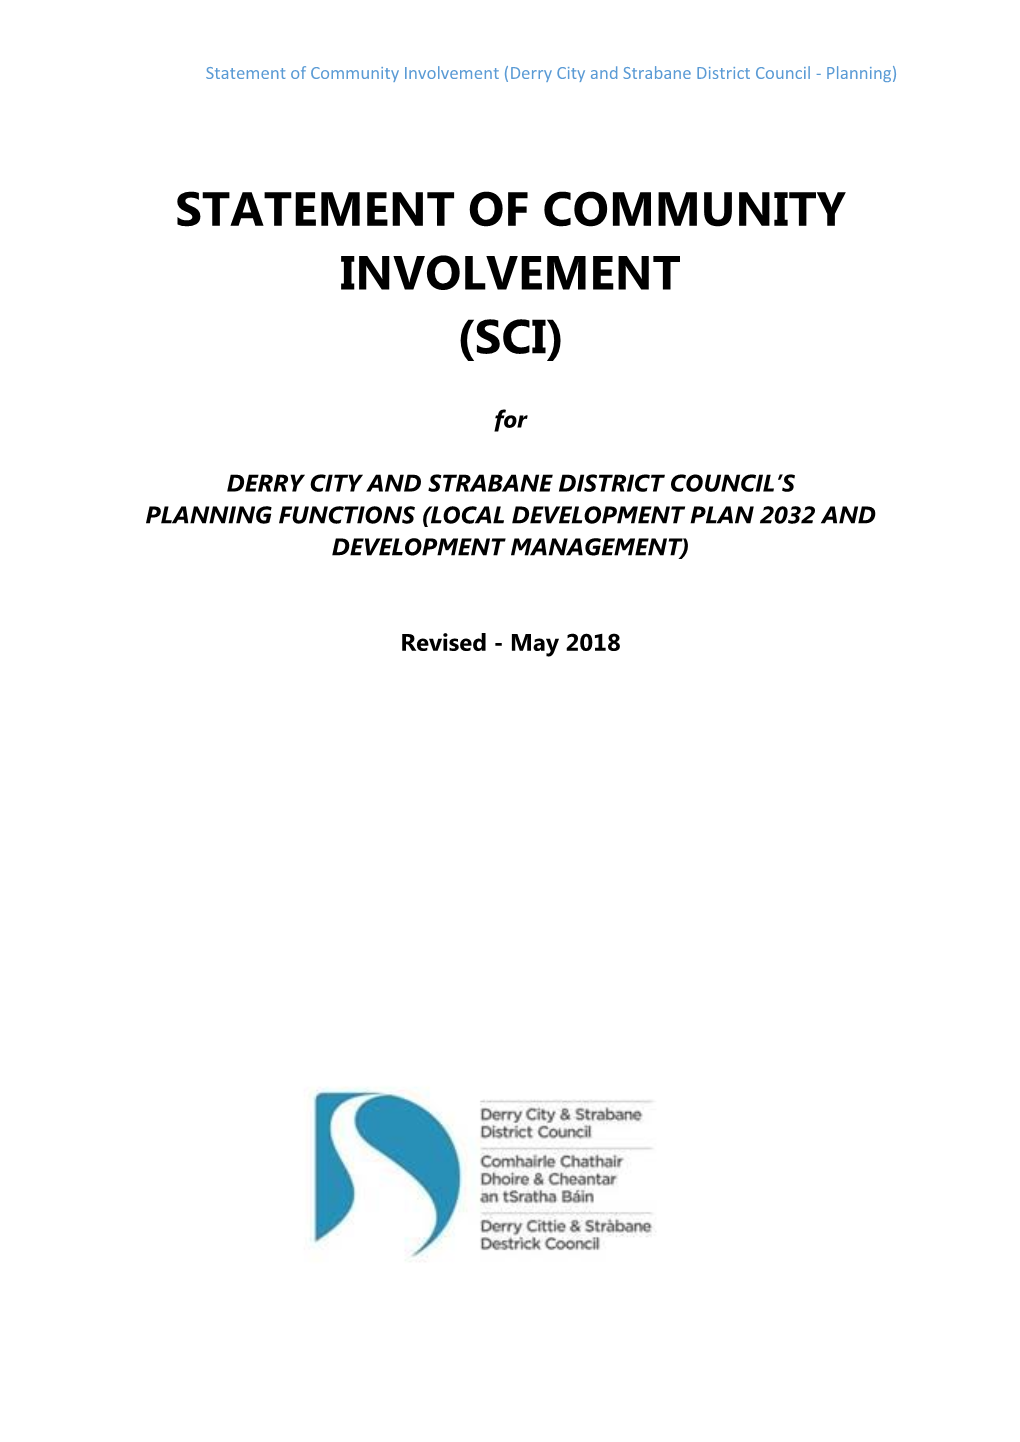 Statement of Community Involvement (Sci)